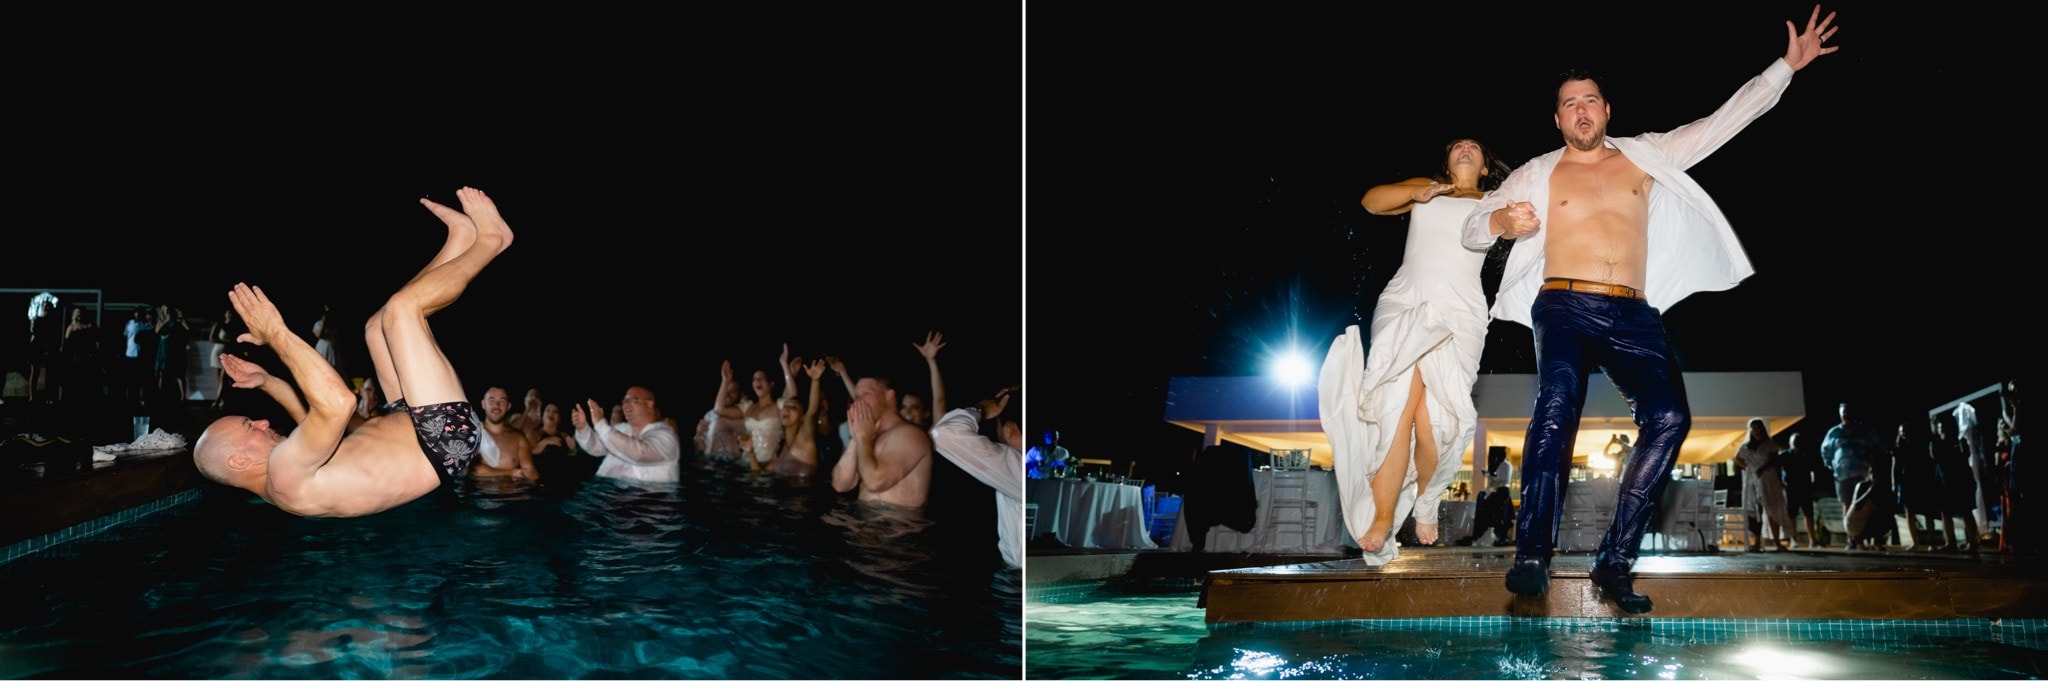 jamaica wedding photos jumping into pool